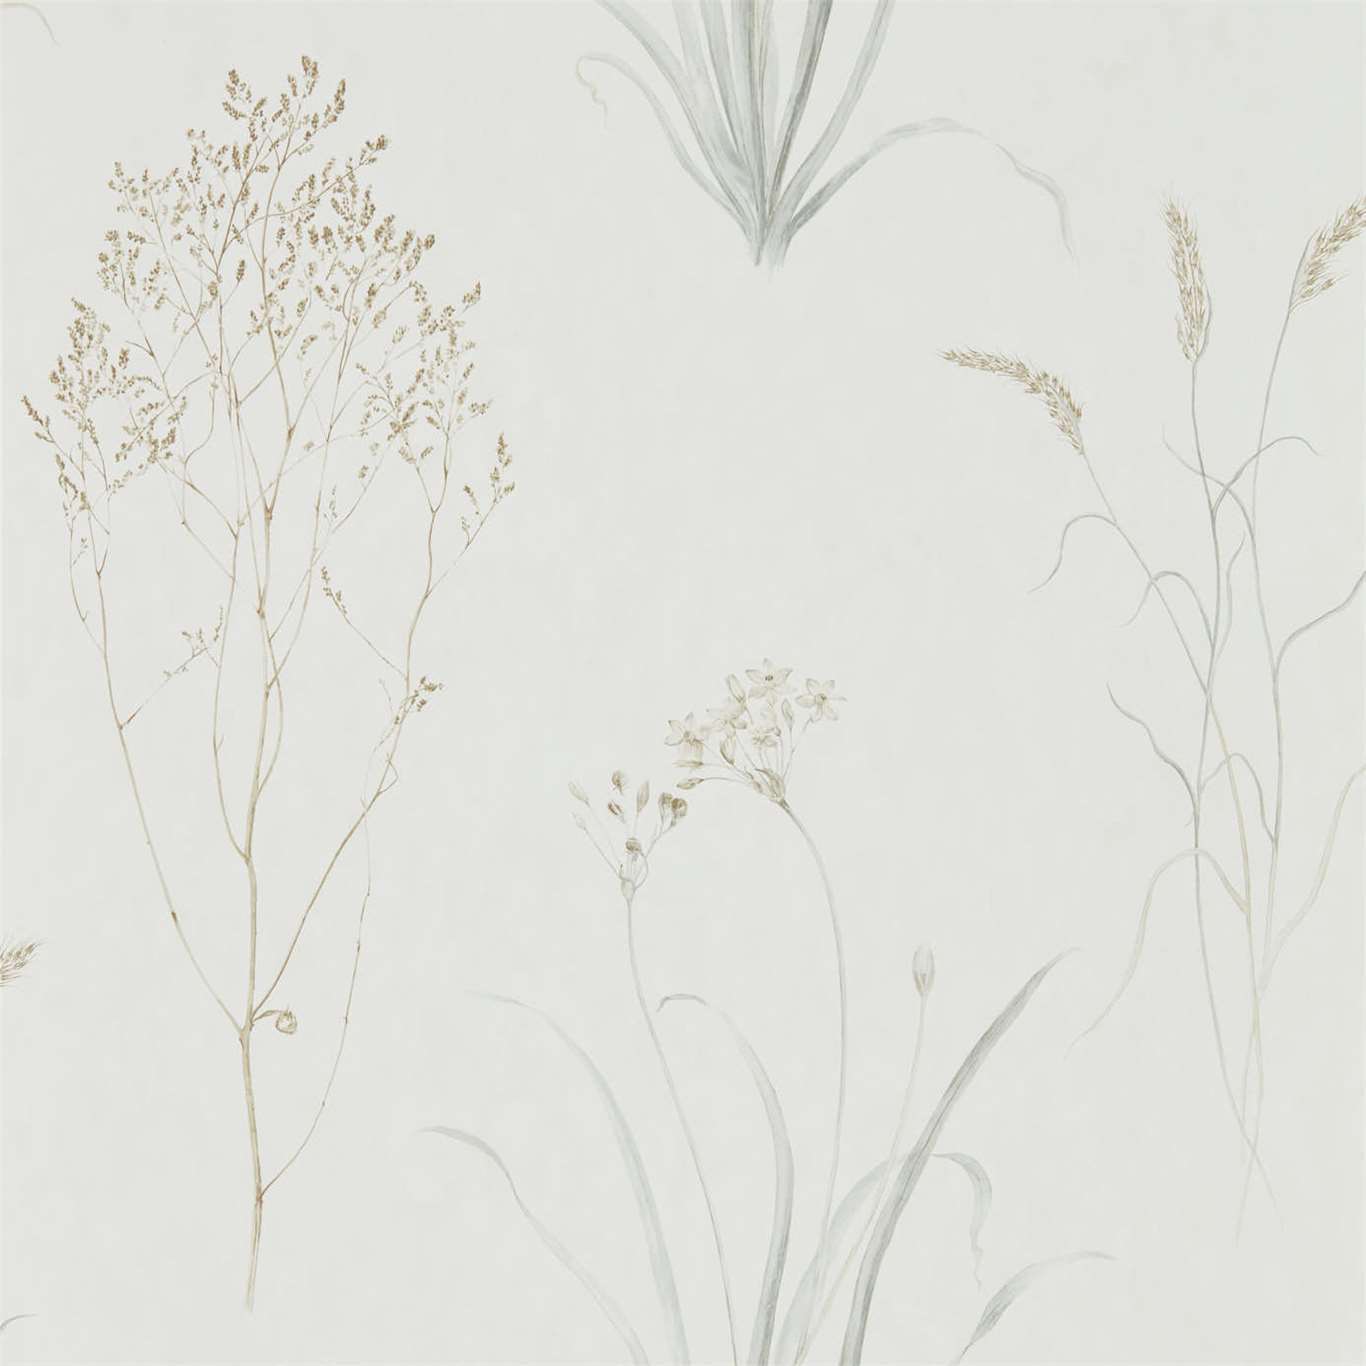 Farne Grasses - Silver/Ivory